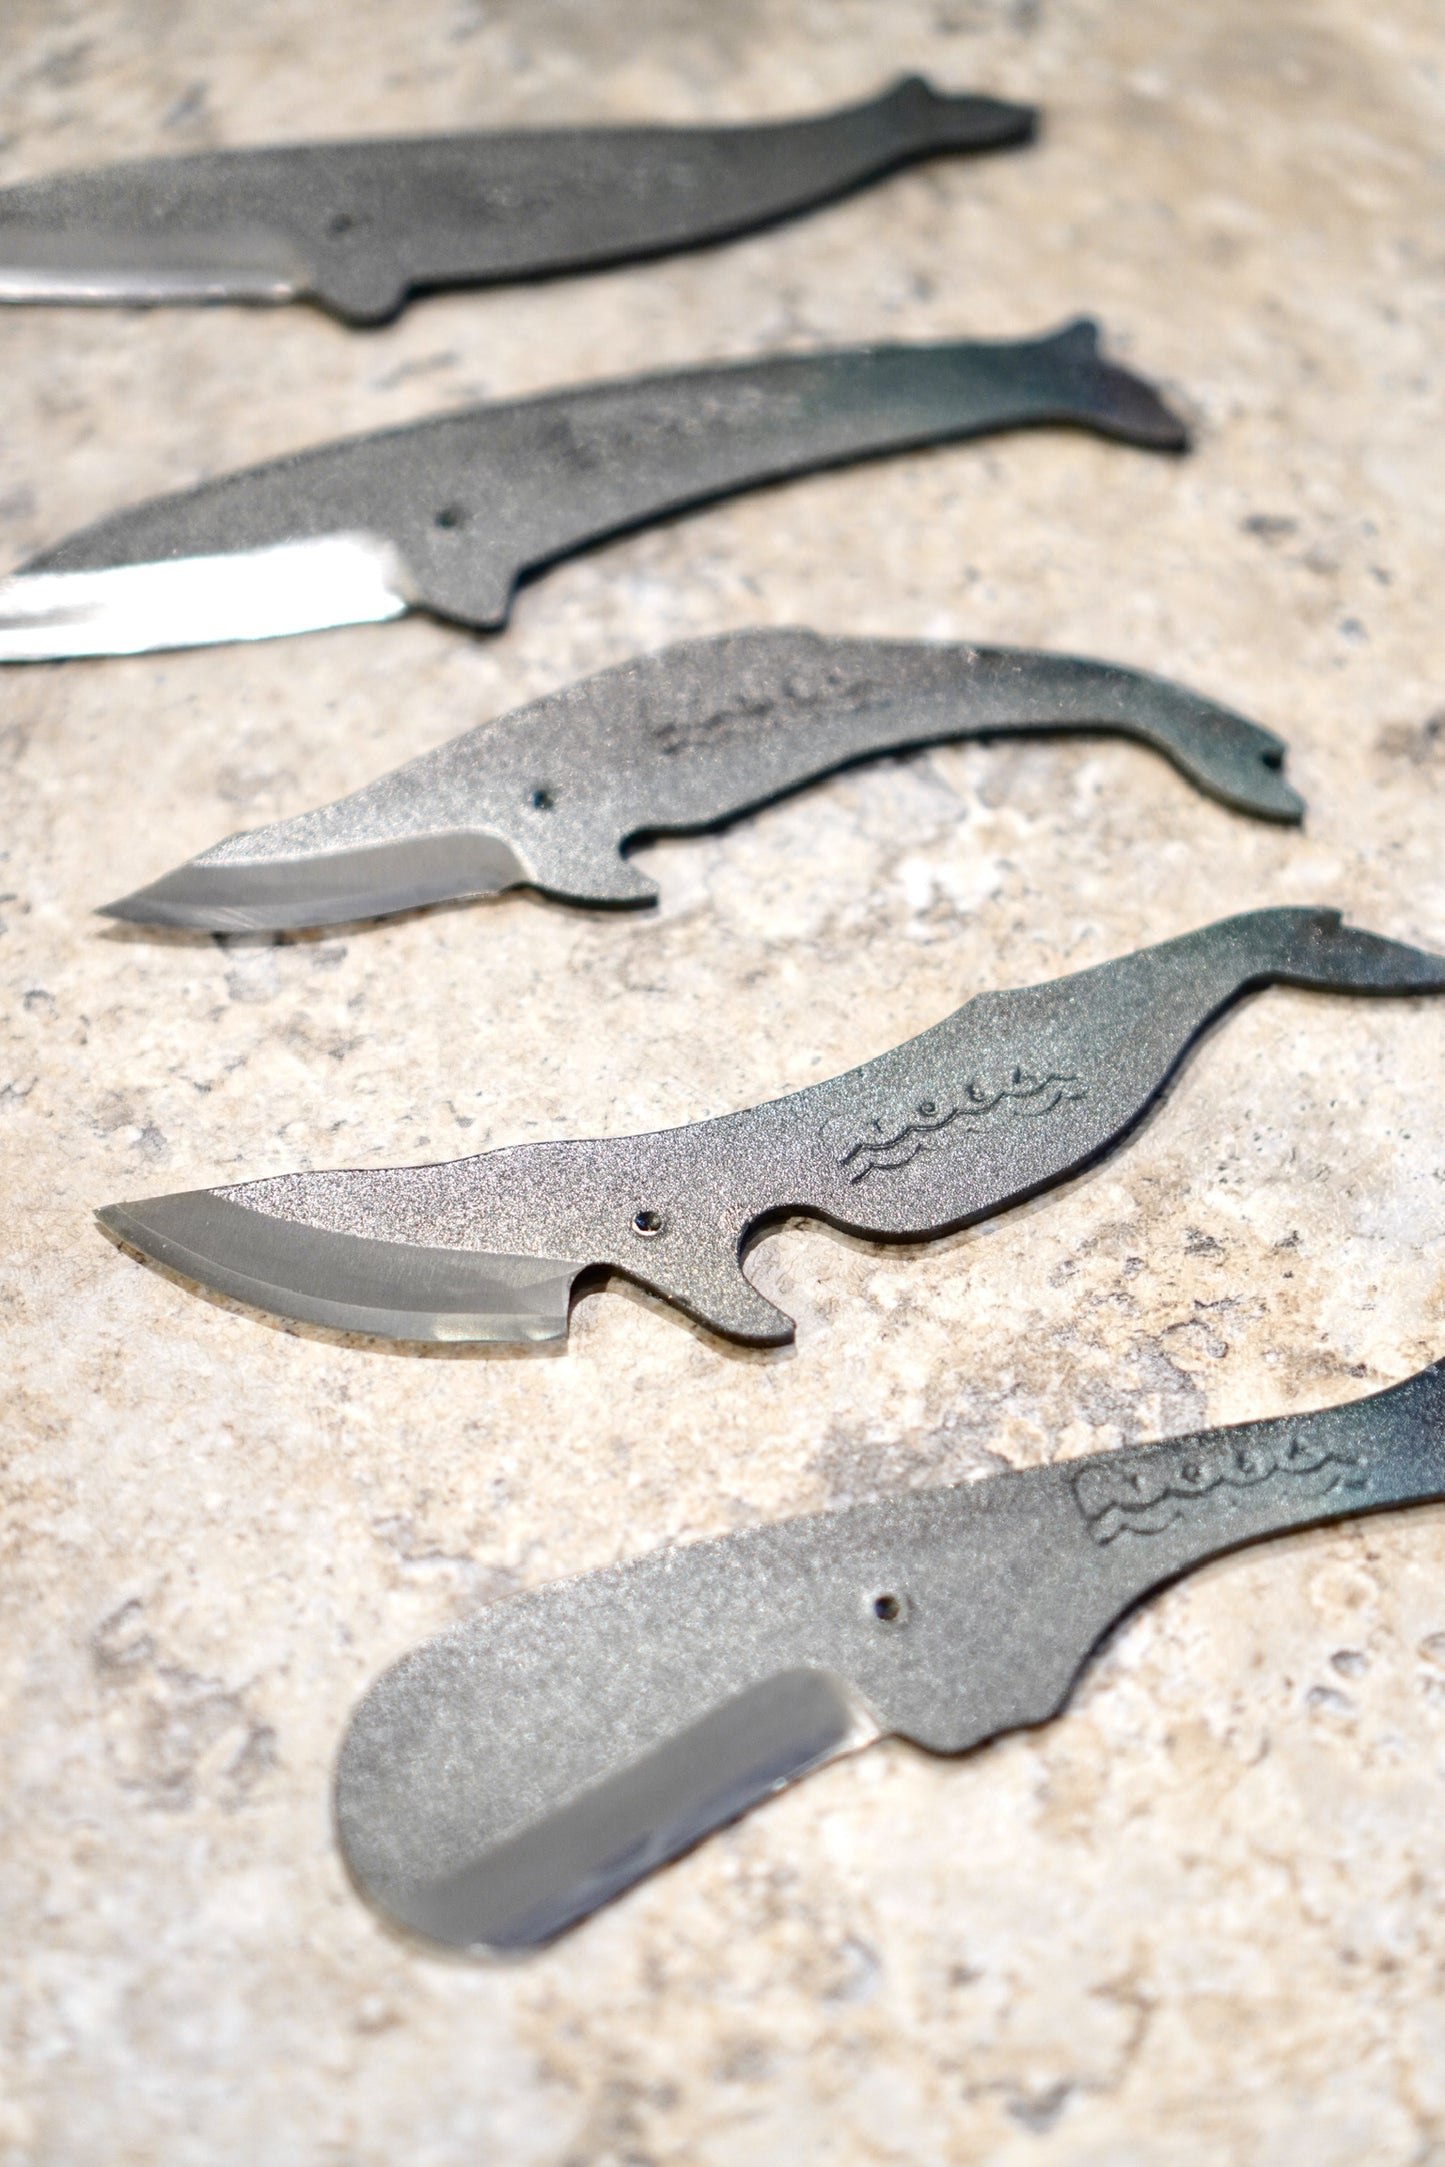 Tosa Kujira Whale Knife